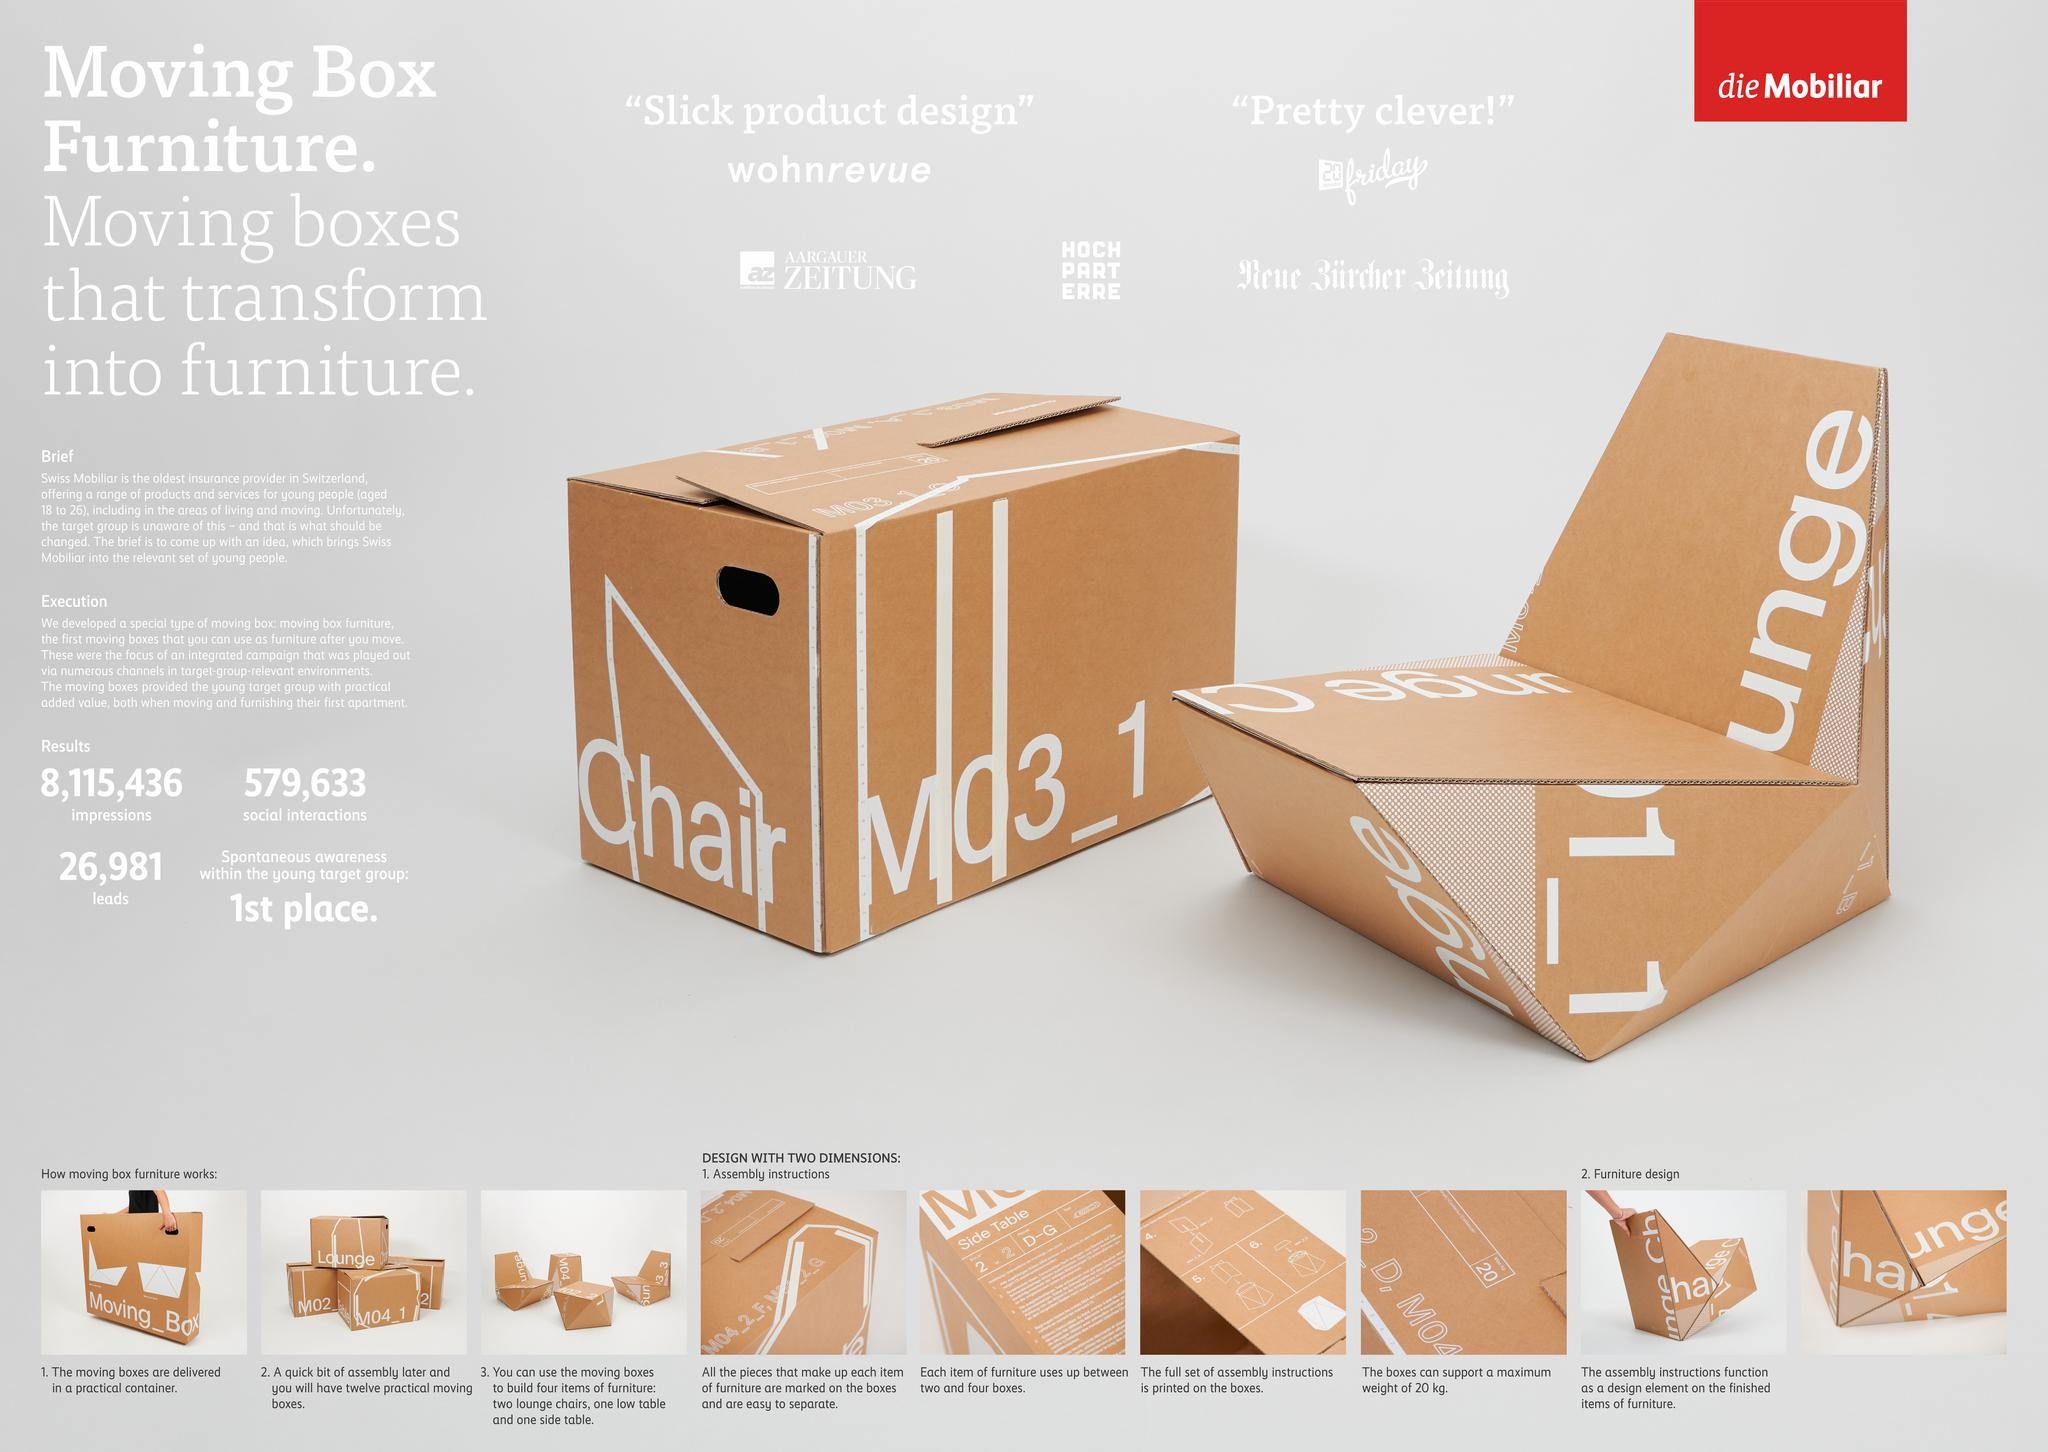 Die Mobiliar – Moving Box Furniture